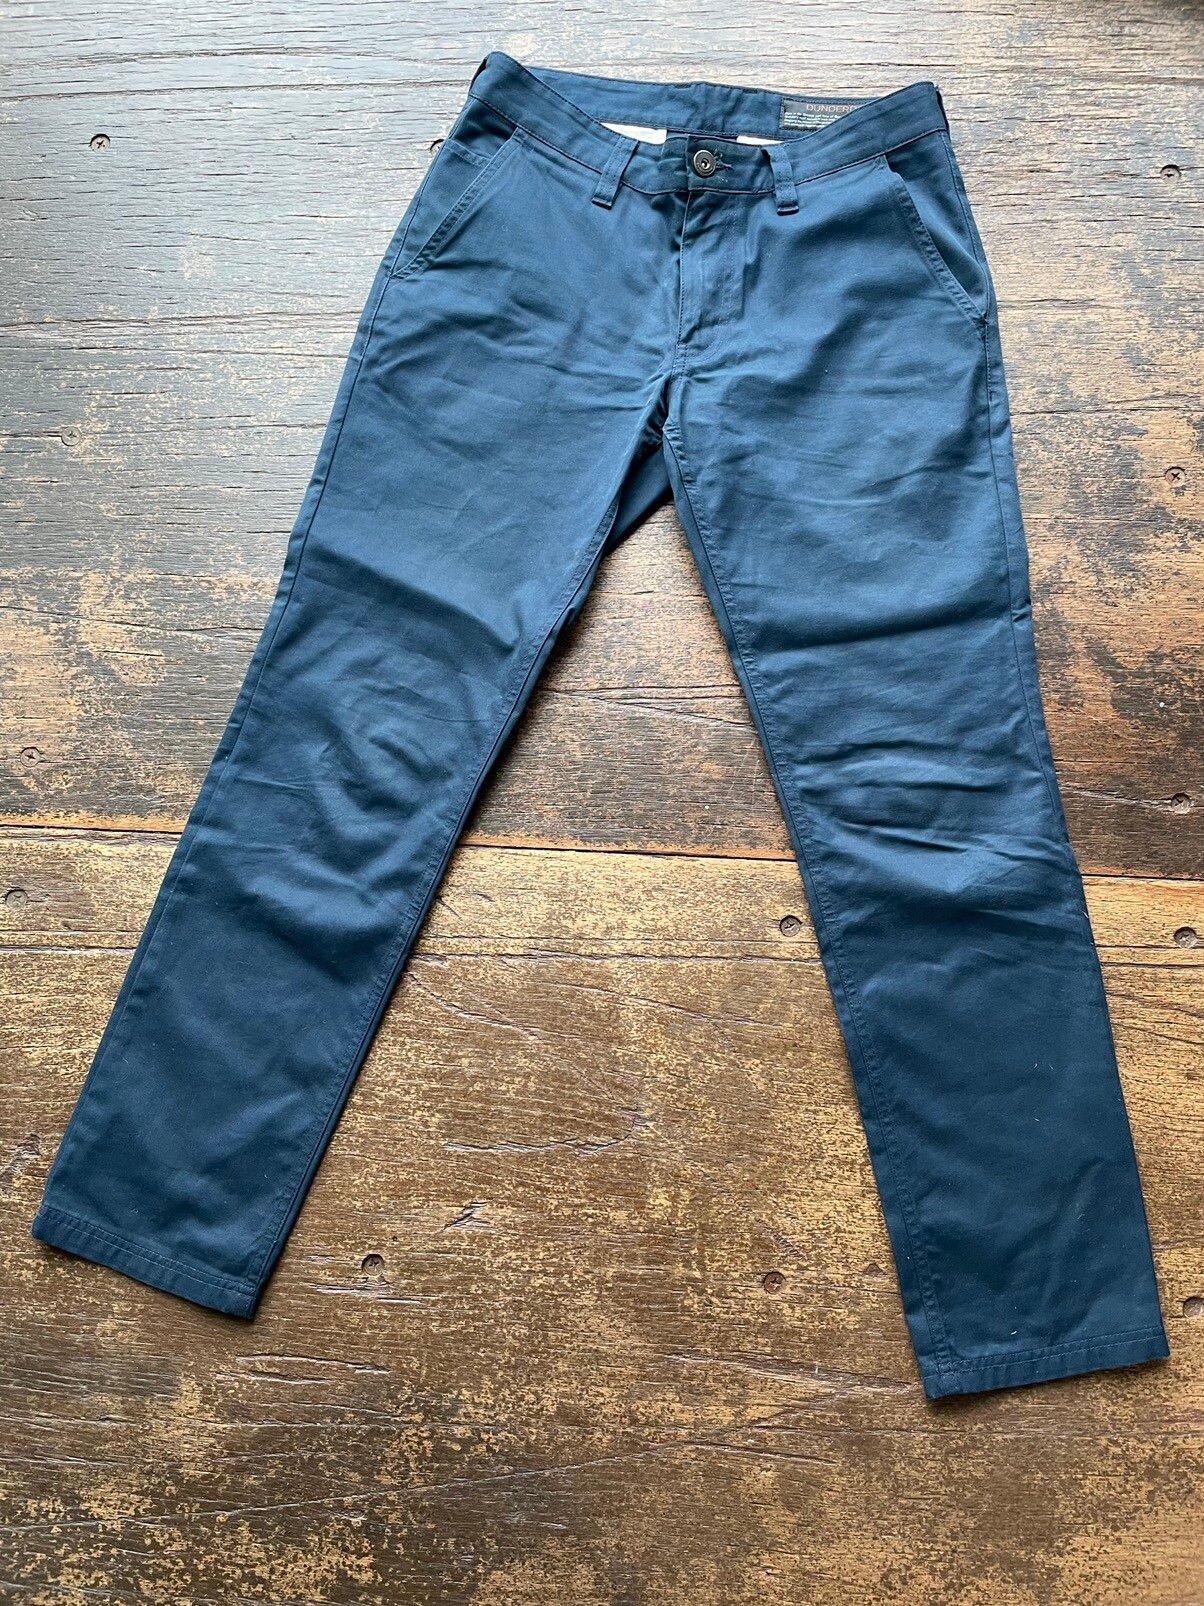 Dunderdon Work Pants 30 x 32 - Navy Blue | Grailed